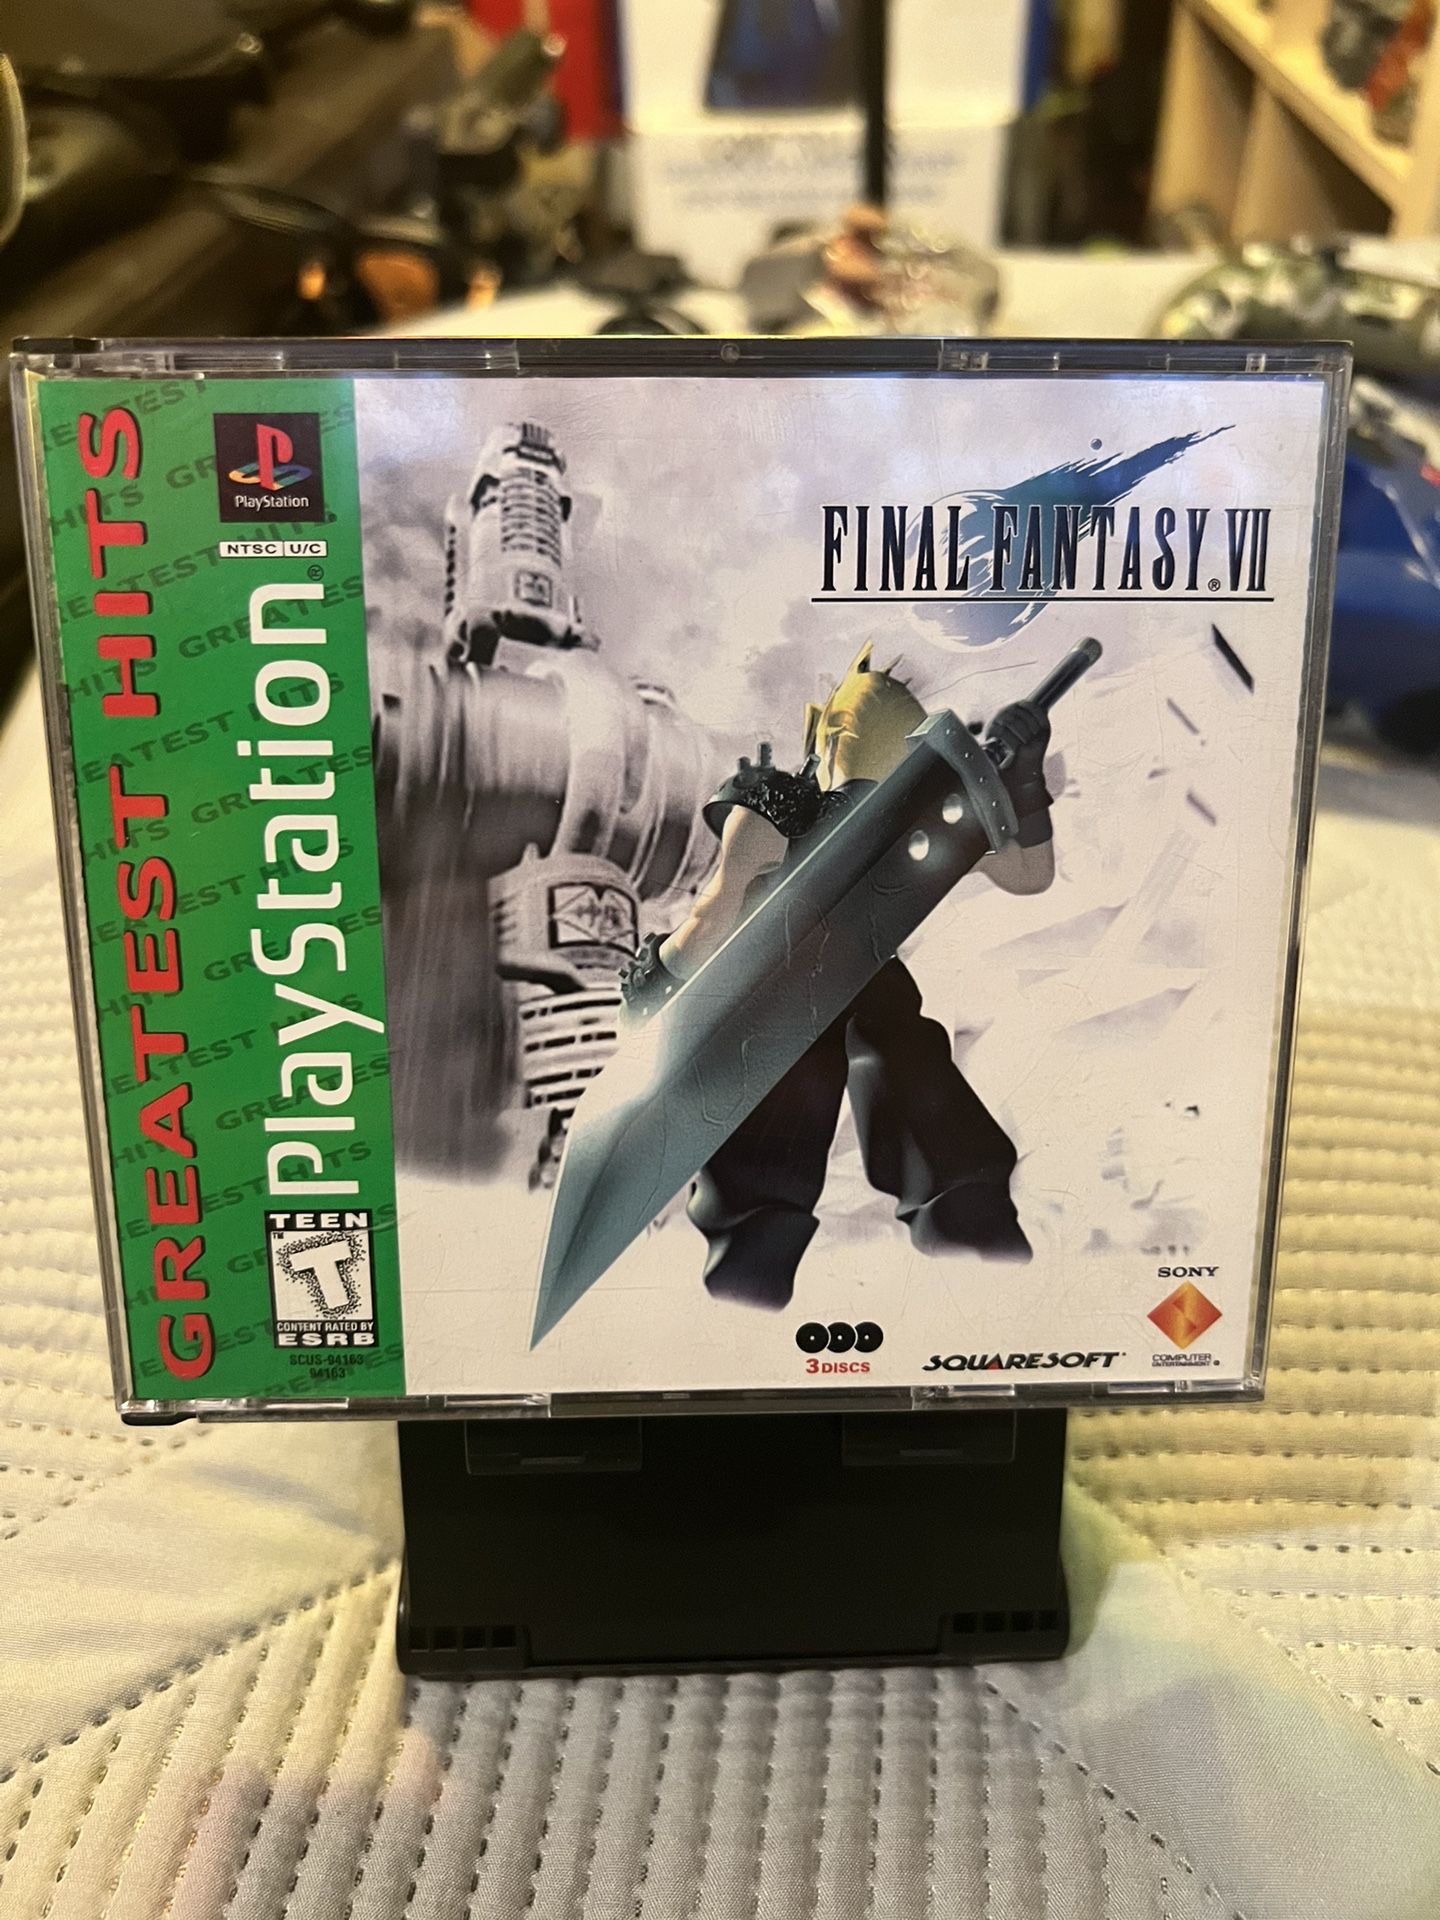 Final Fantasy 7 VII (Sony PlayStation 1, 1997) PS1 Greatest Hits 3 Discs